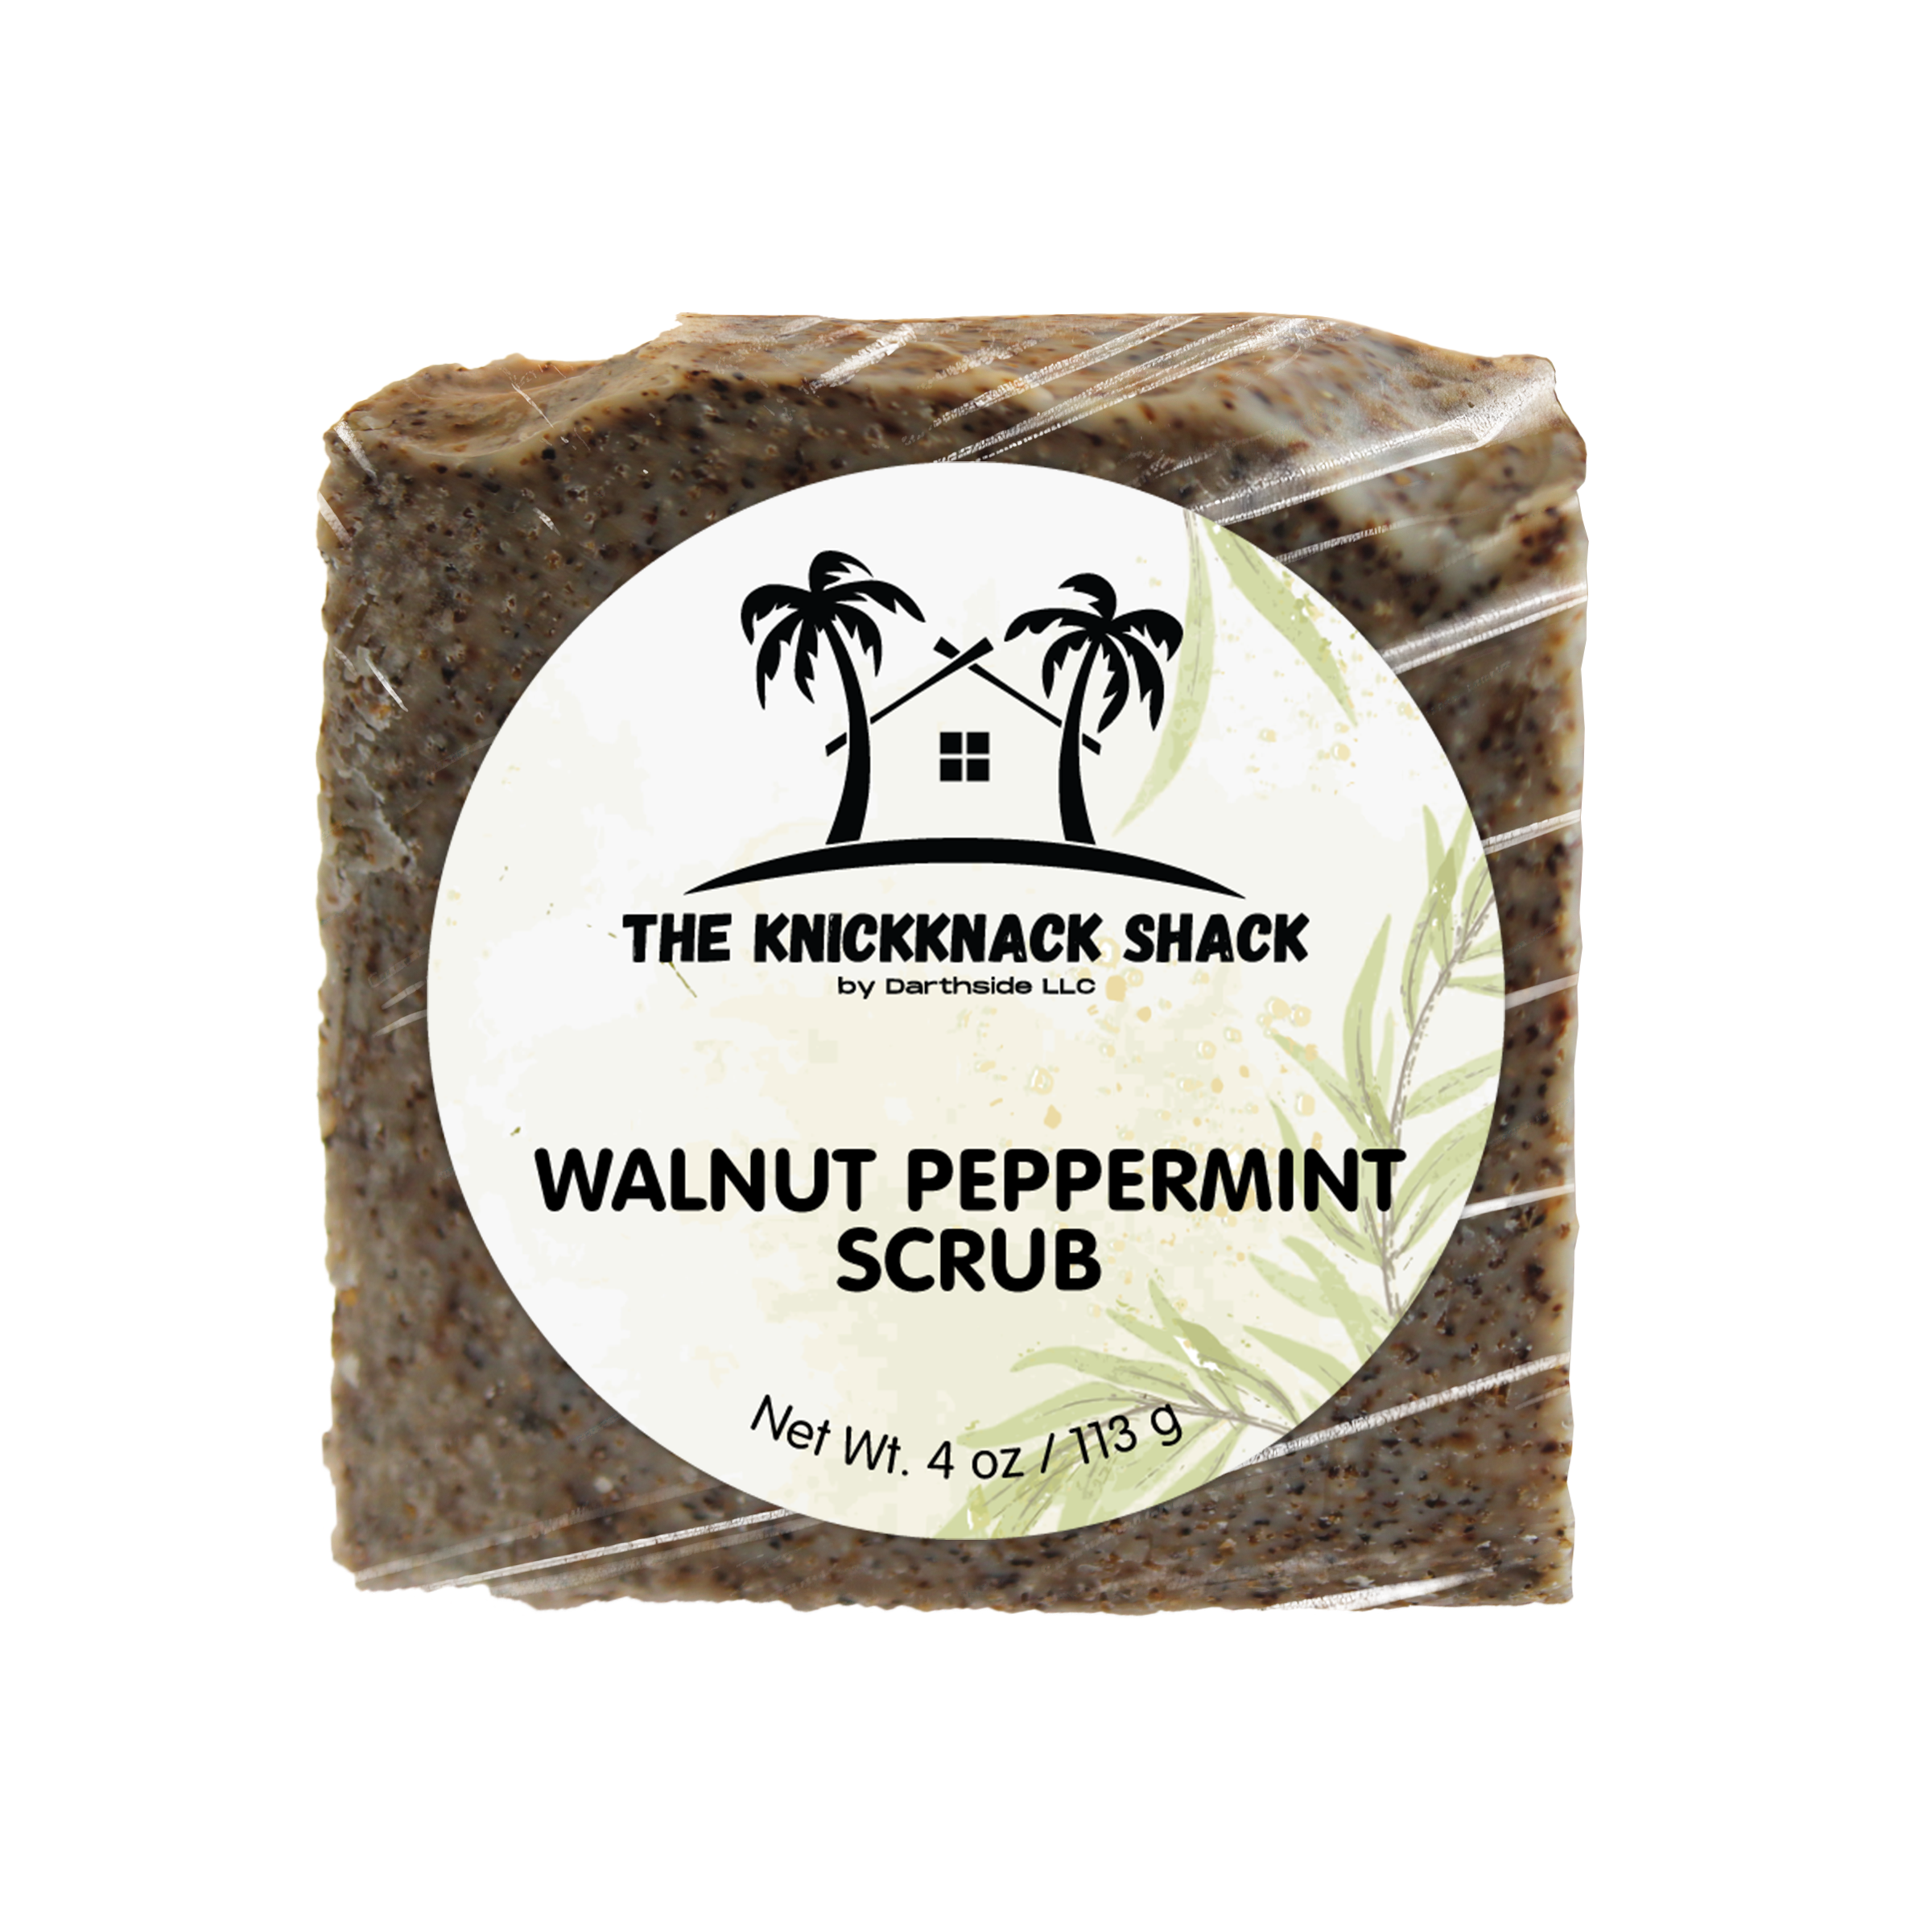 Walnut Peppermint Scrub